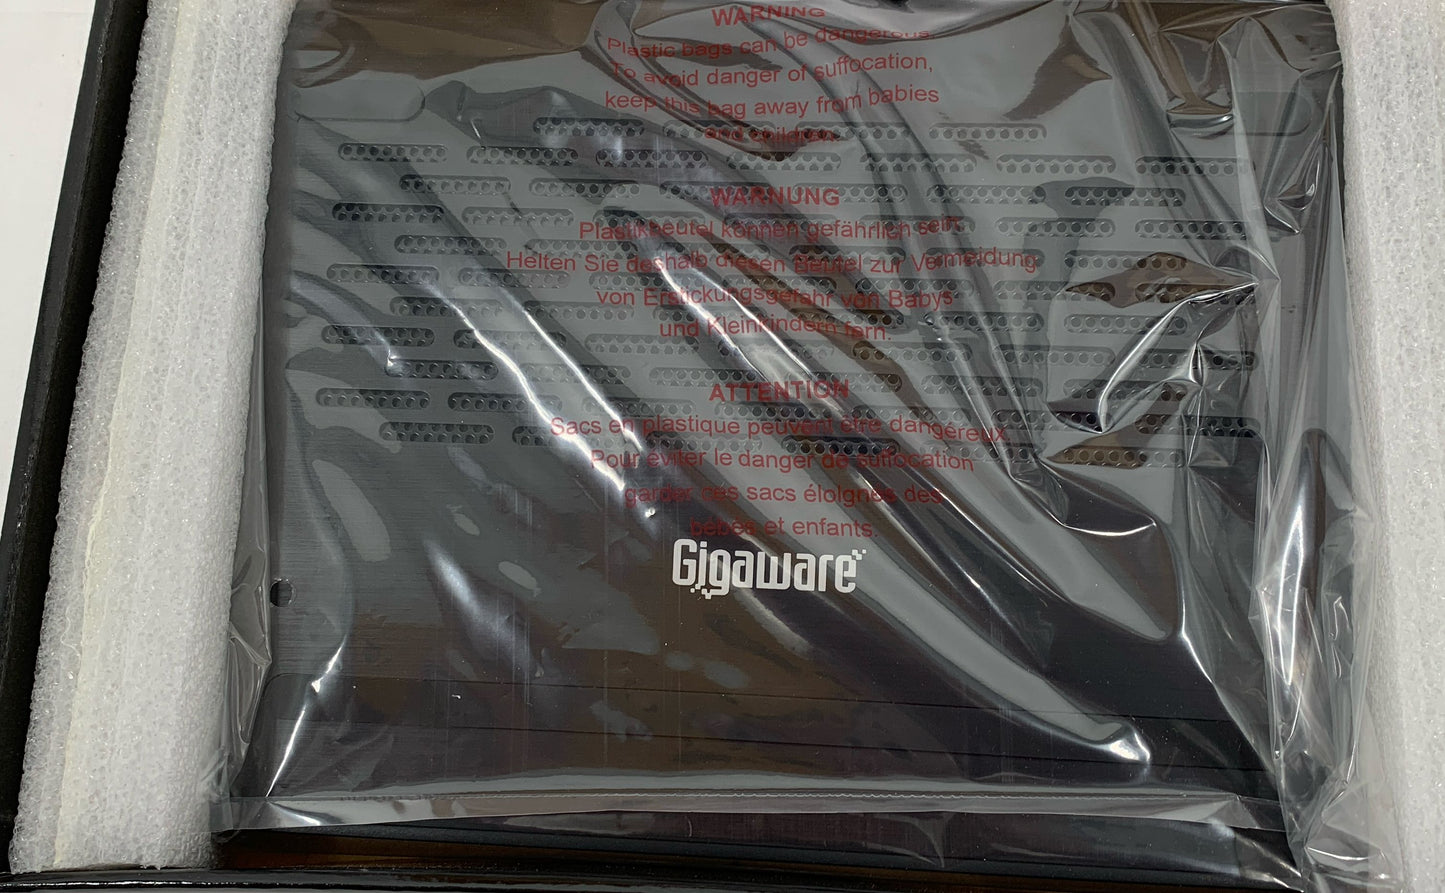 Gigaware New Netbook Cooling Pad Pc Mac USB 10A10 Ultra Quiet Fan